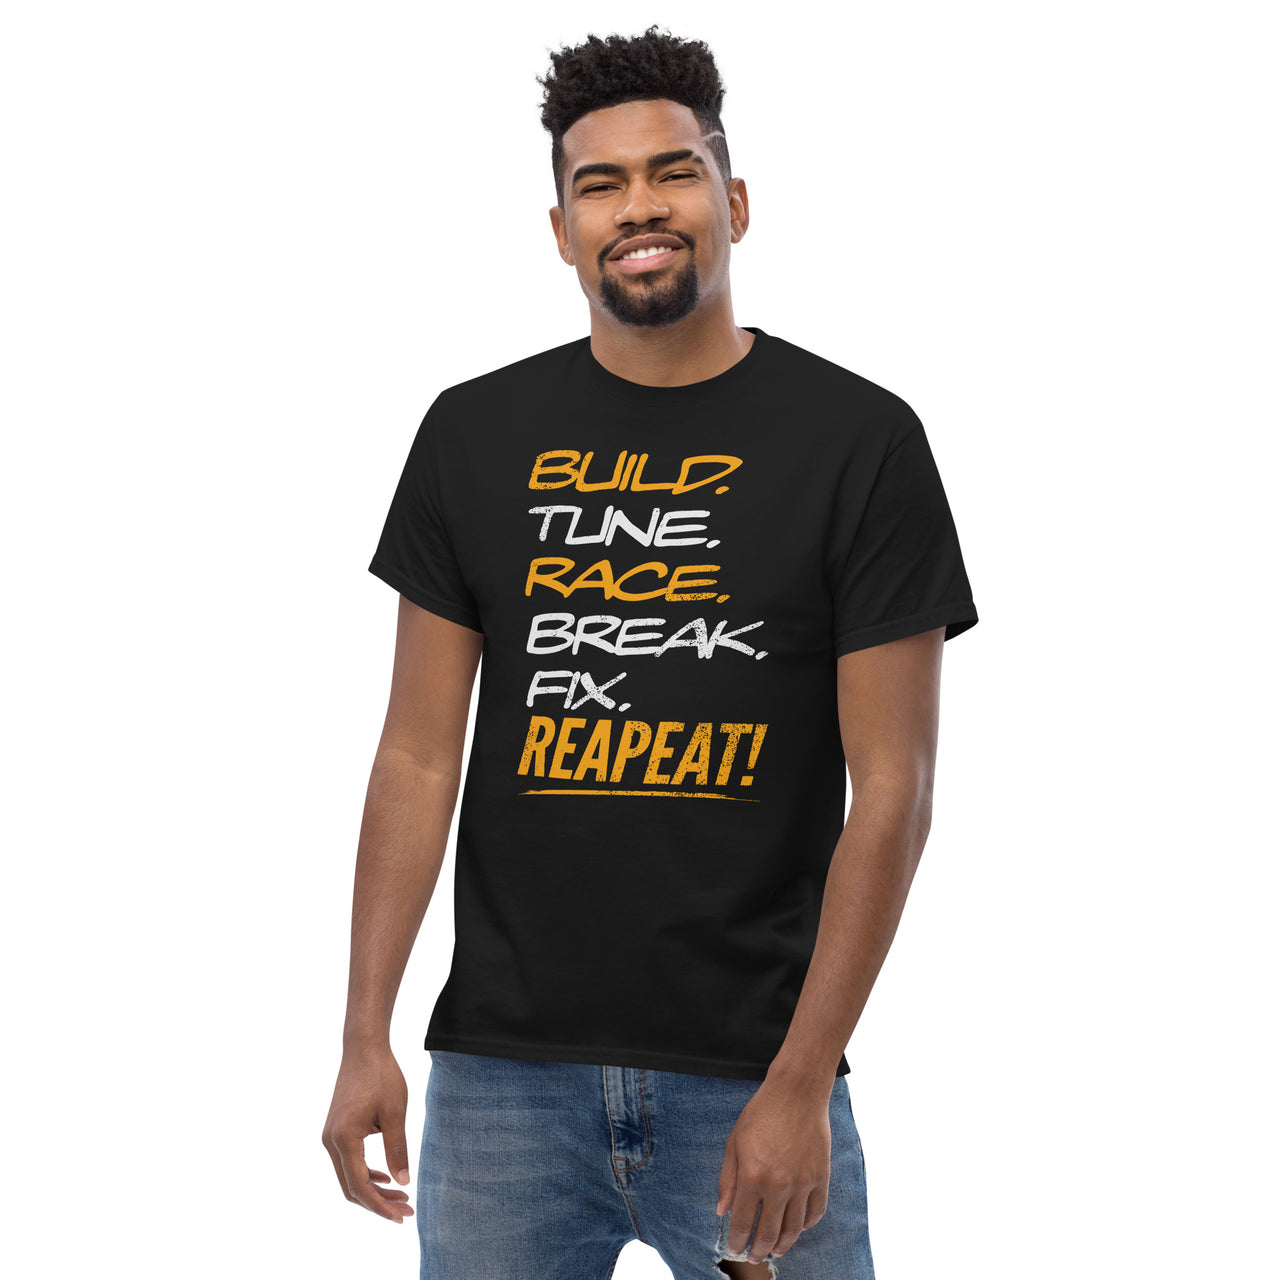 Drag Racing T-Shirt, Car Enthusiasts Tee, Racer / Racecar Lover T-Shirt modeled in black